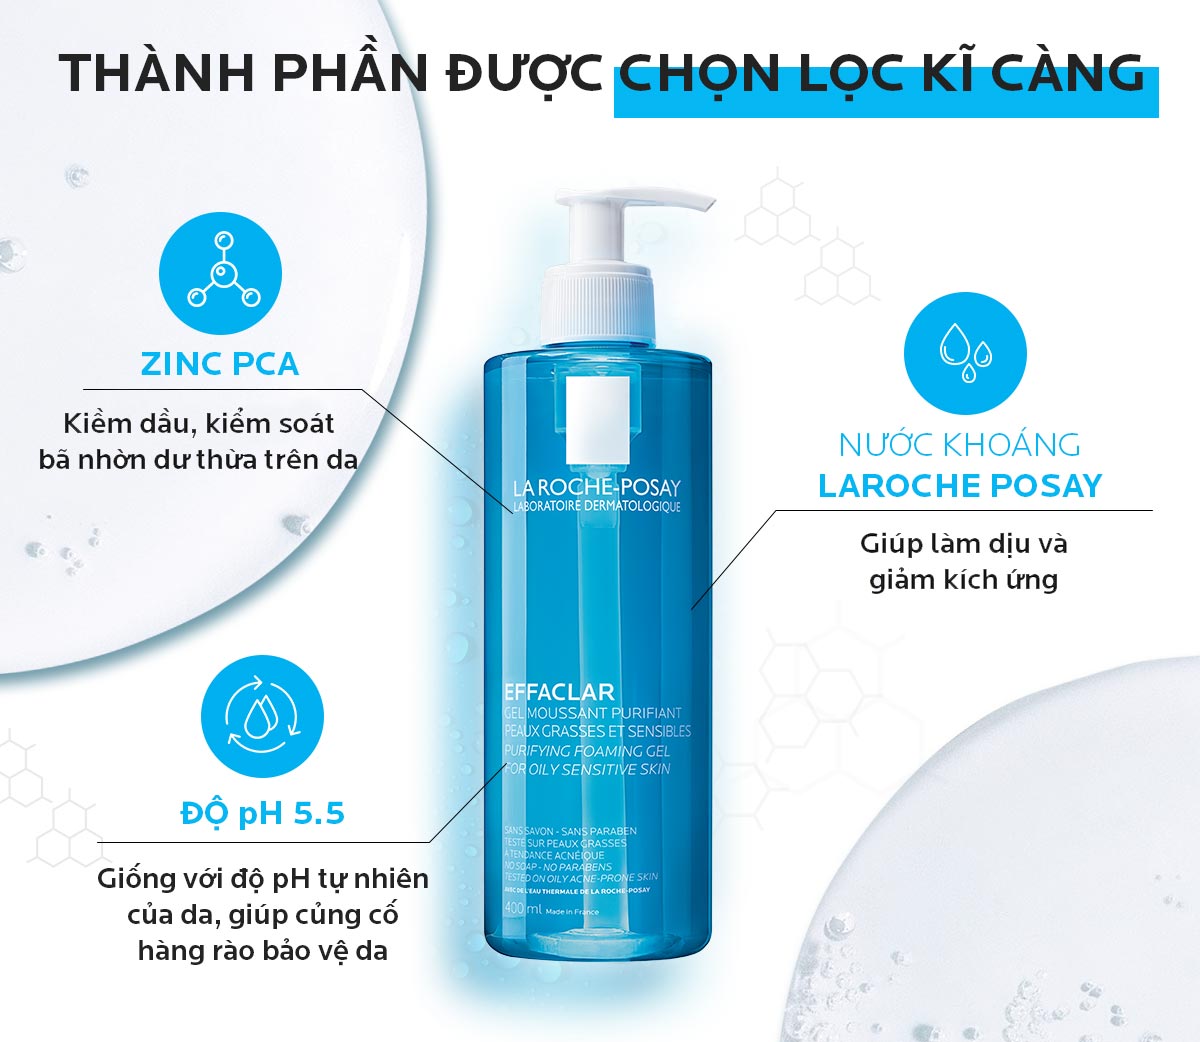 La Roche-Posay Effaclar Purifying Foaming Gel For Oily Sensitive Skin hiện đã có mặt tại Chiaki.vn